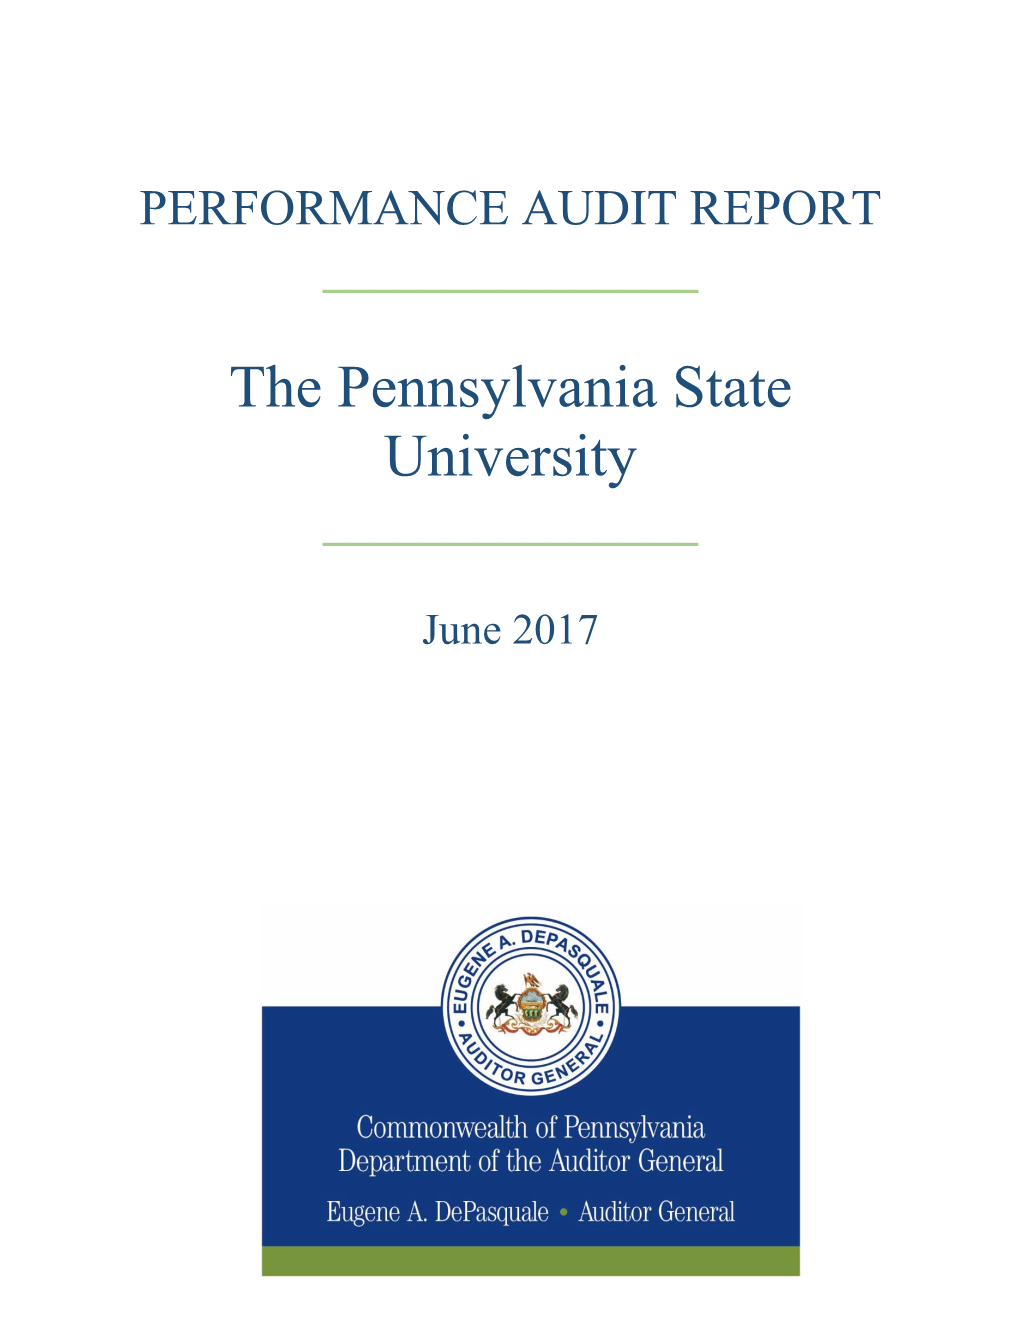 The Pennsylvania State University ______